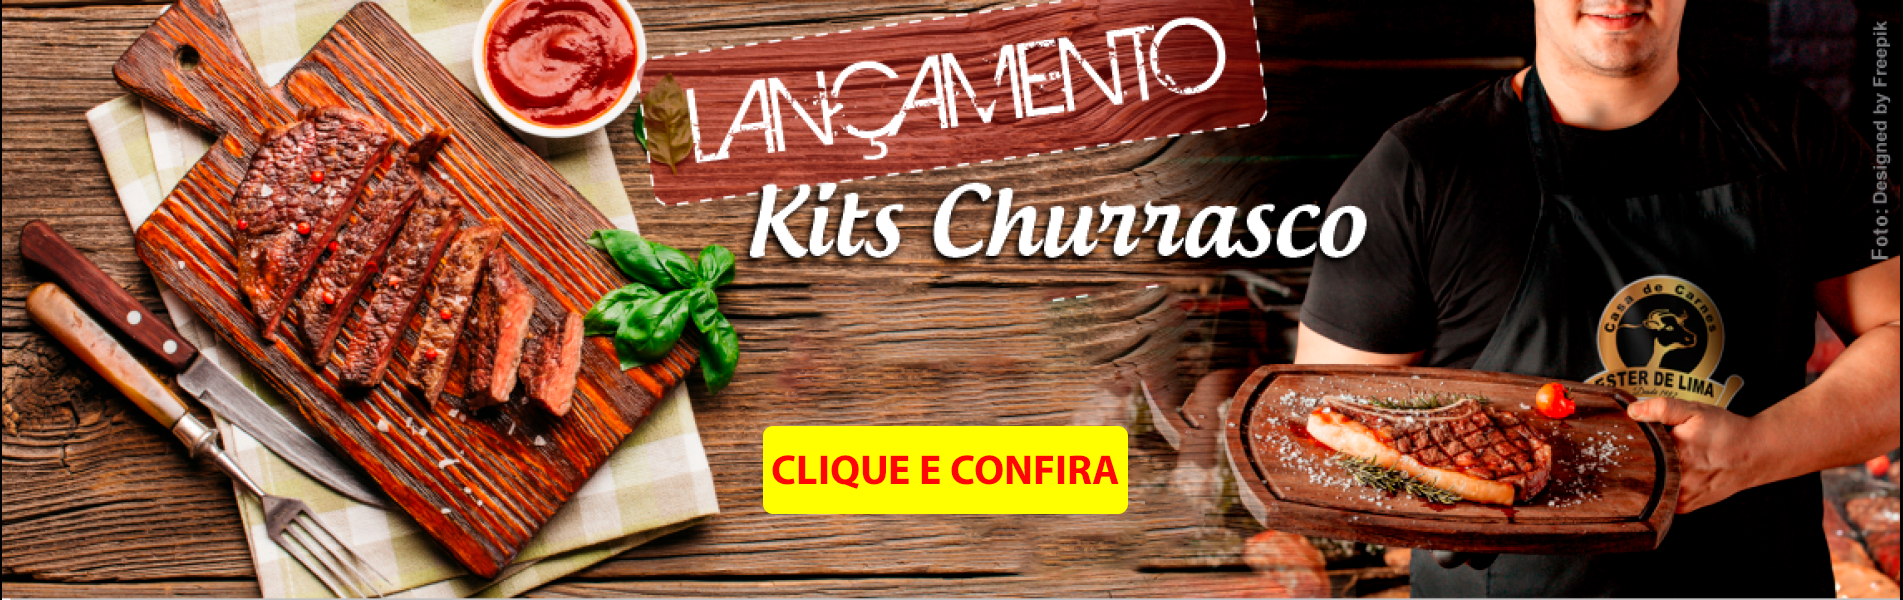 Kit Churrasco - Avental